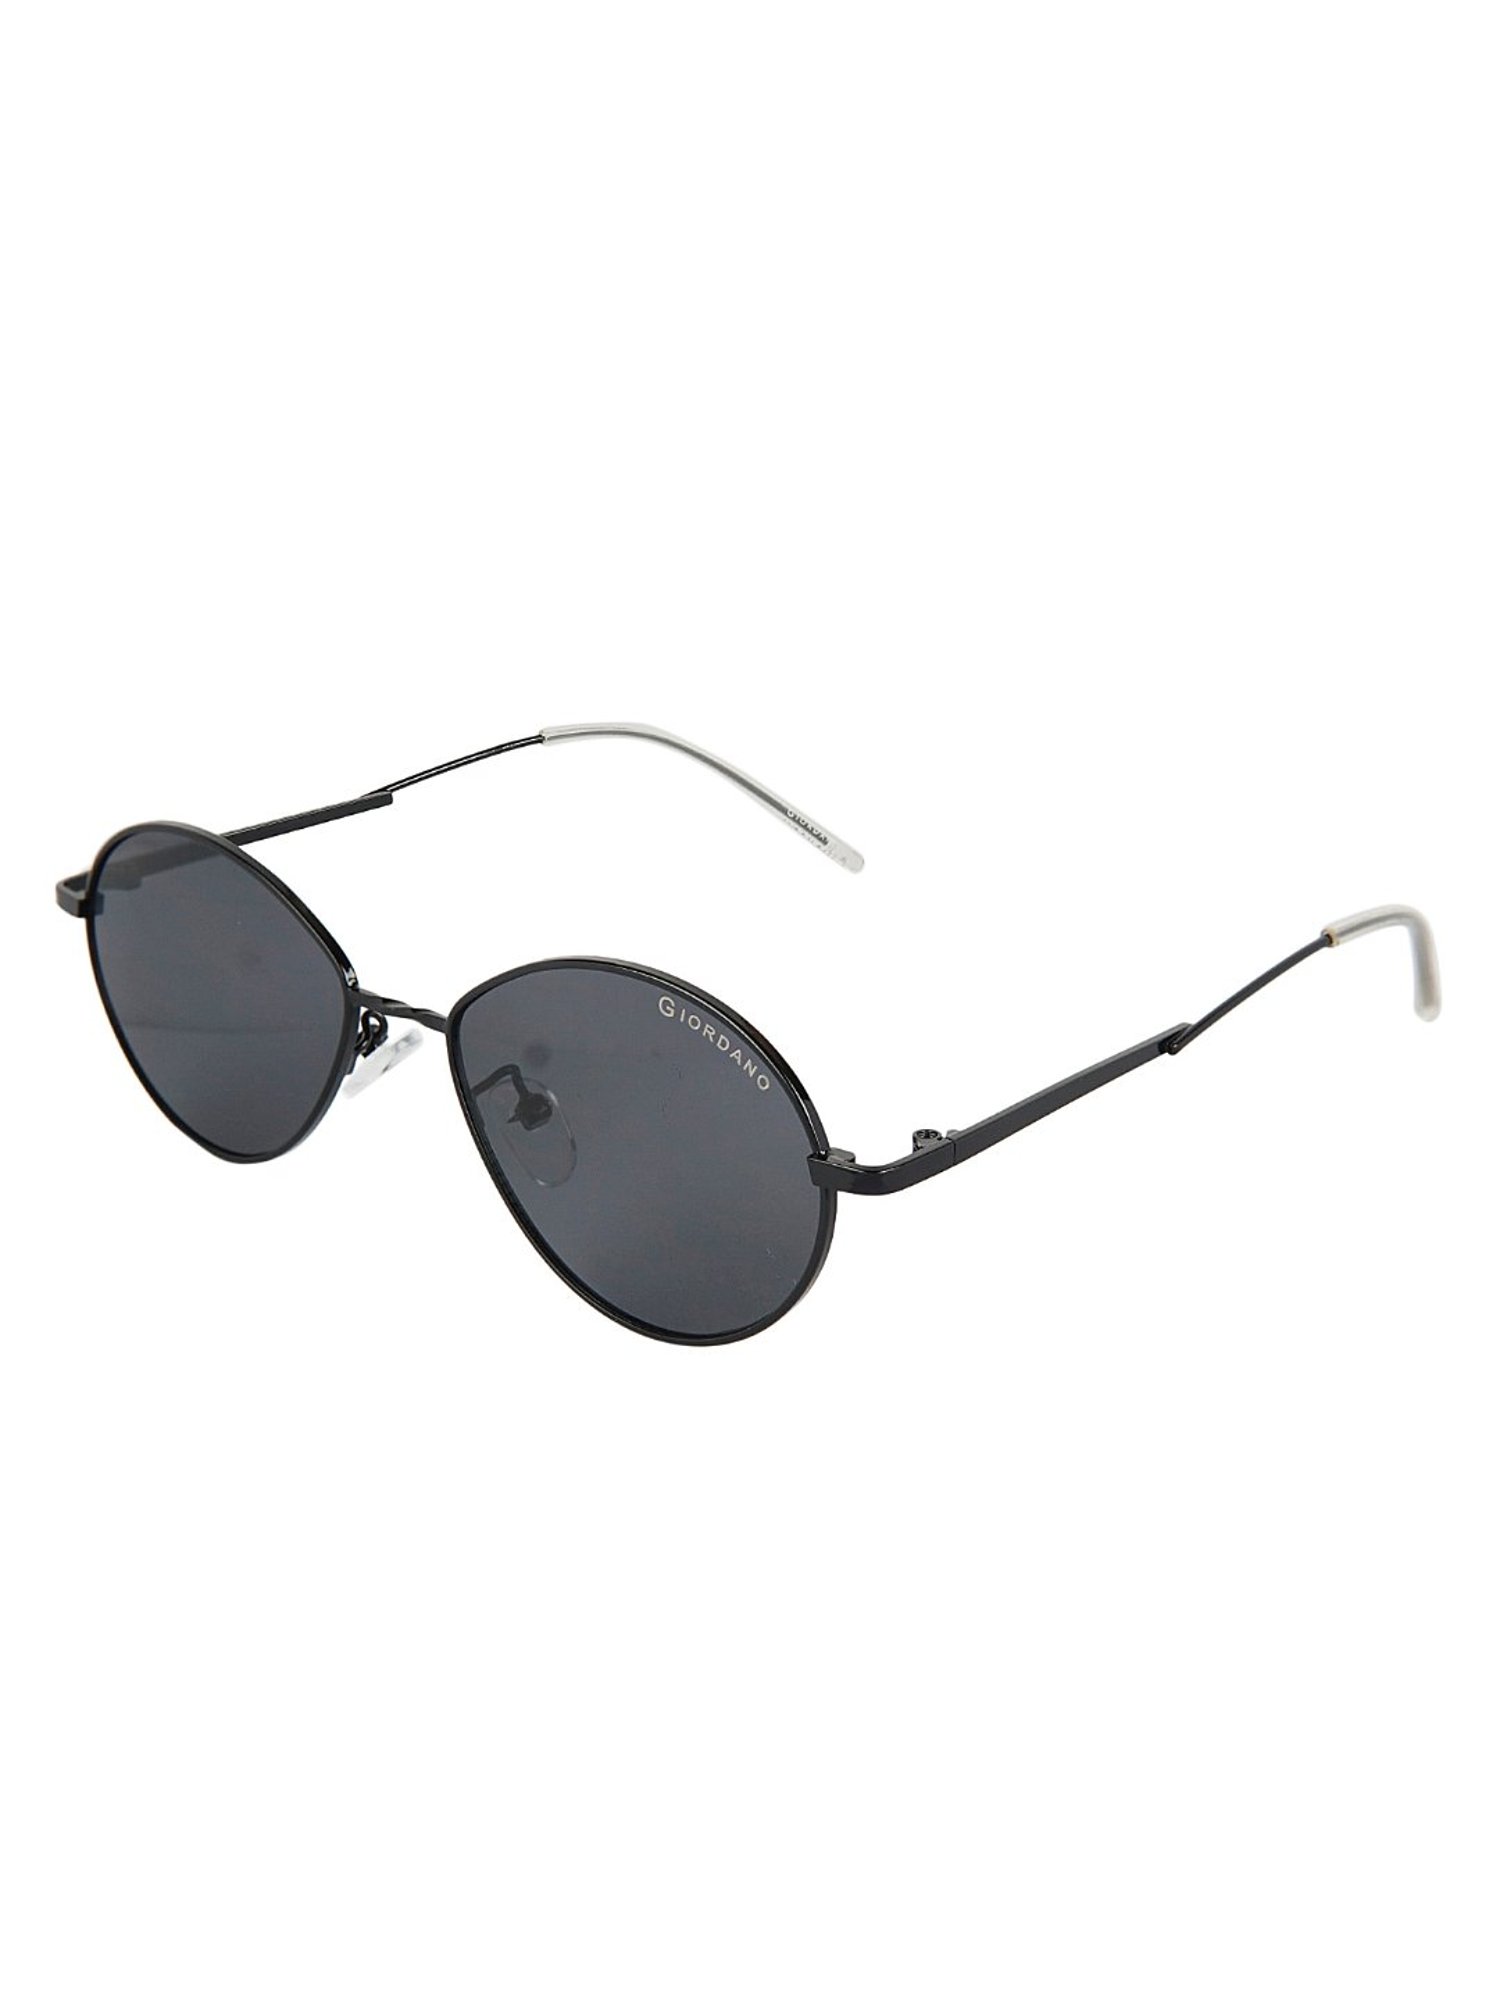 Buy Giordano Polycarbonate Sunglasses Uv Protected - Ga90318C01 (51) online